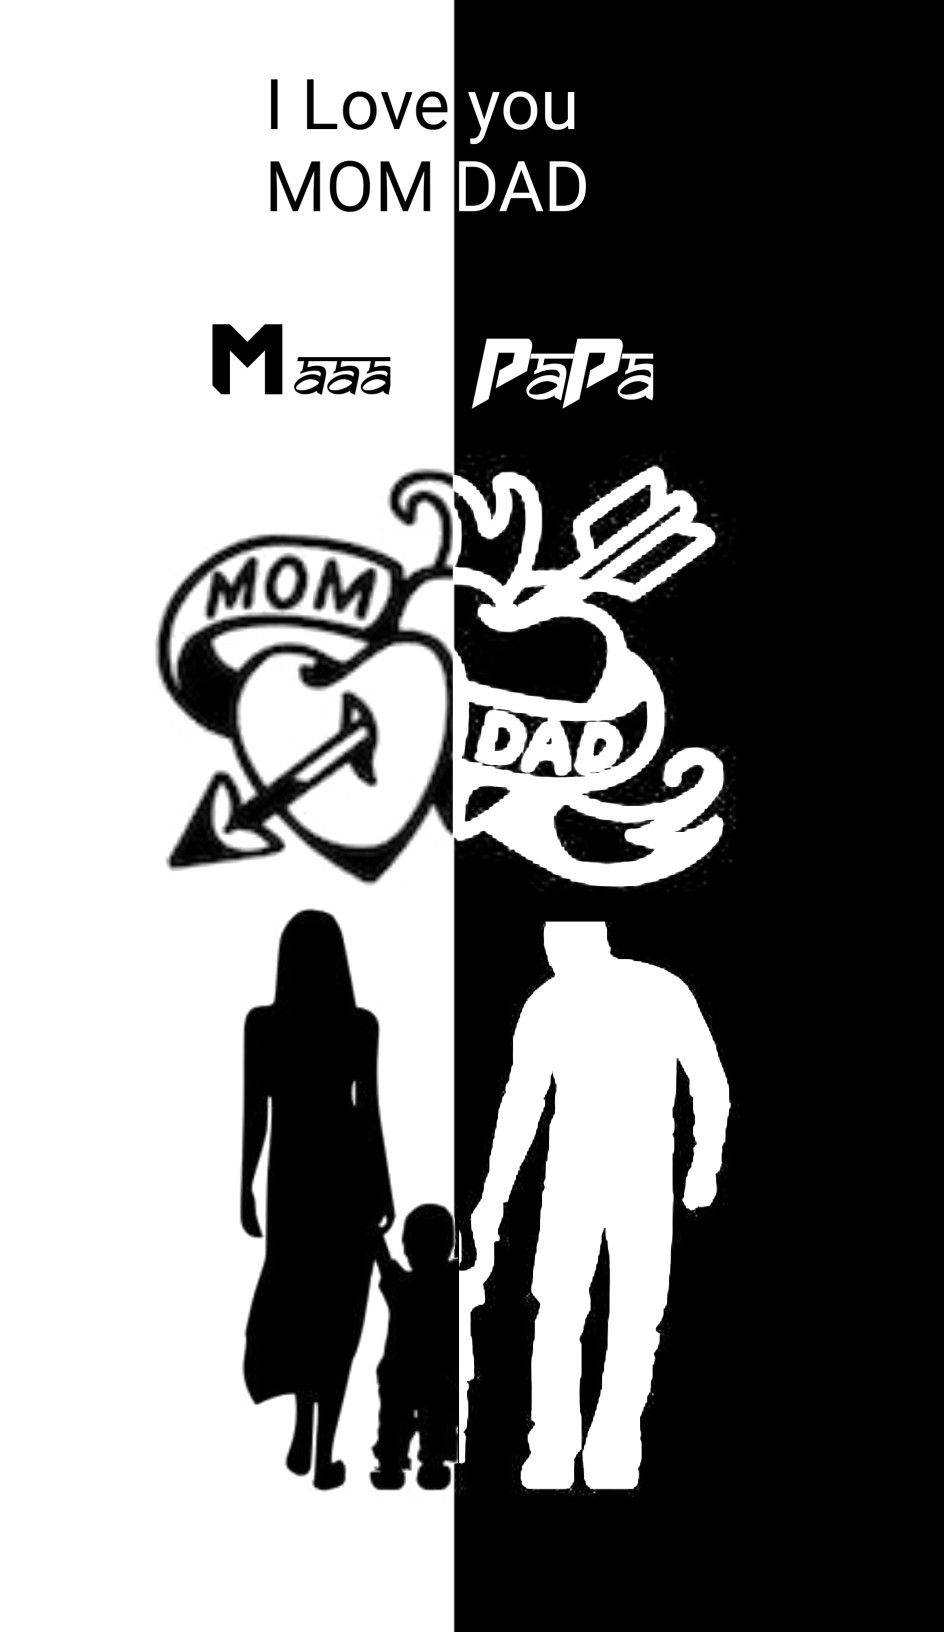 mom dad logo black and white